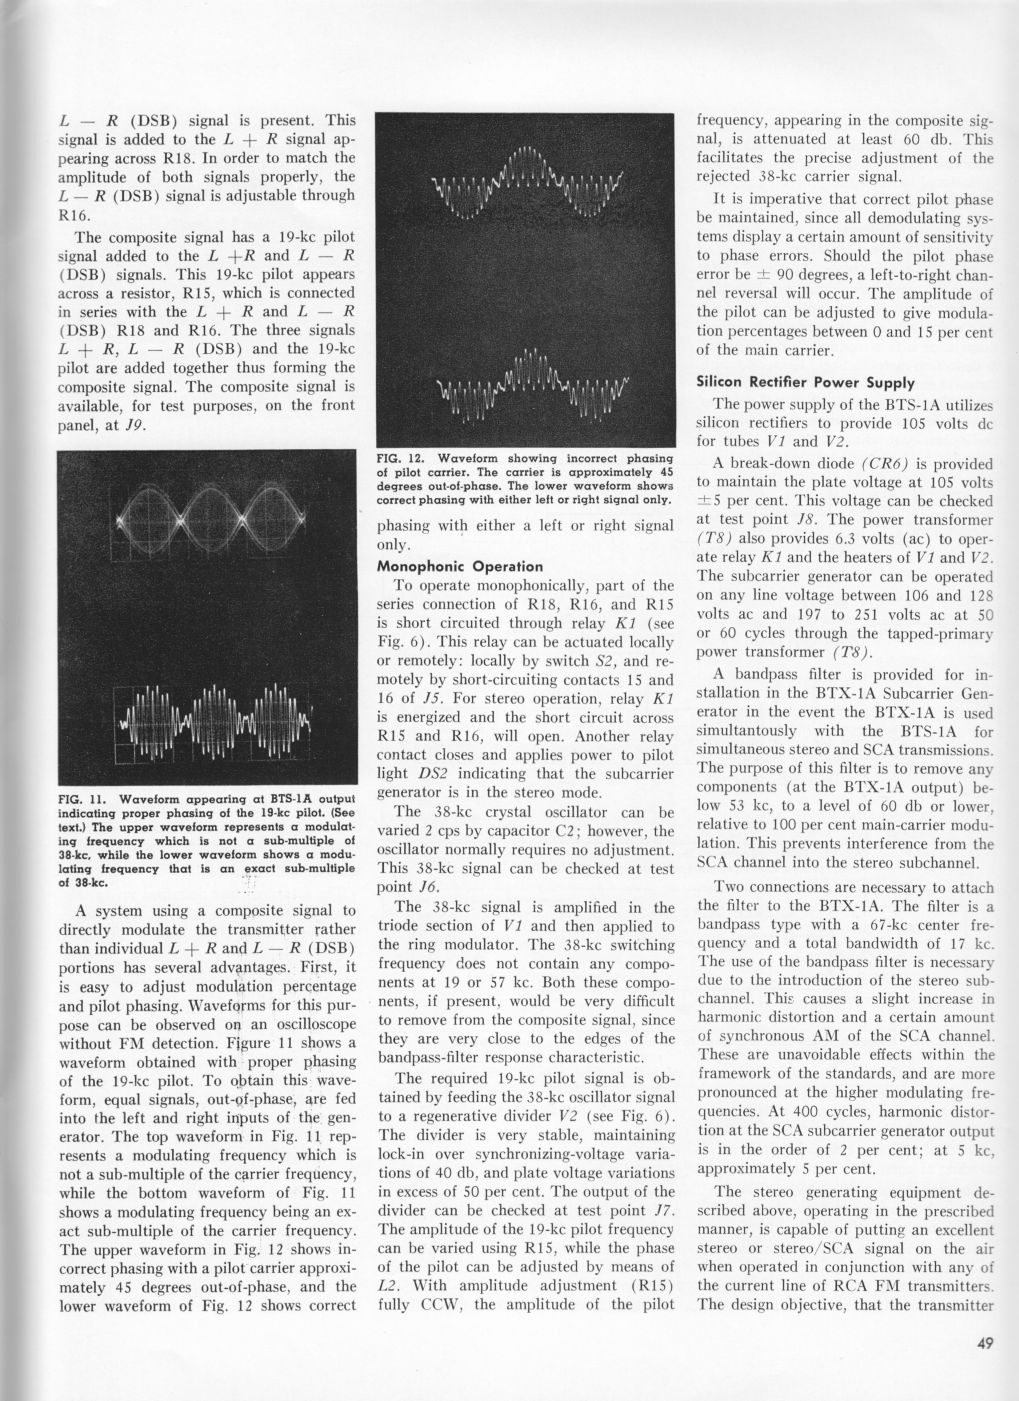 RCA TT-25AL Television Amplifier, page 5